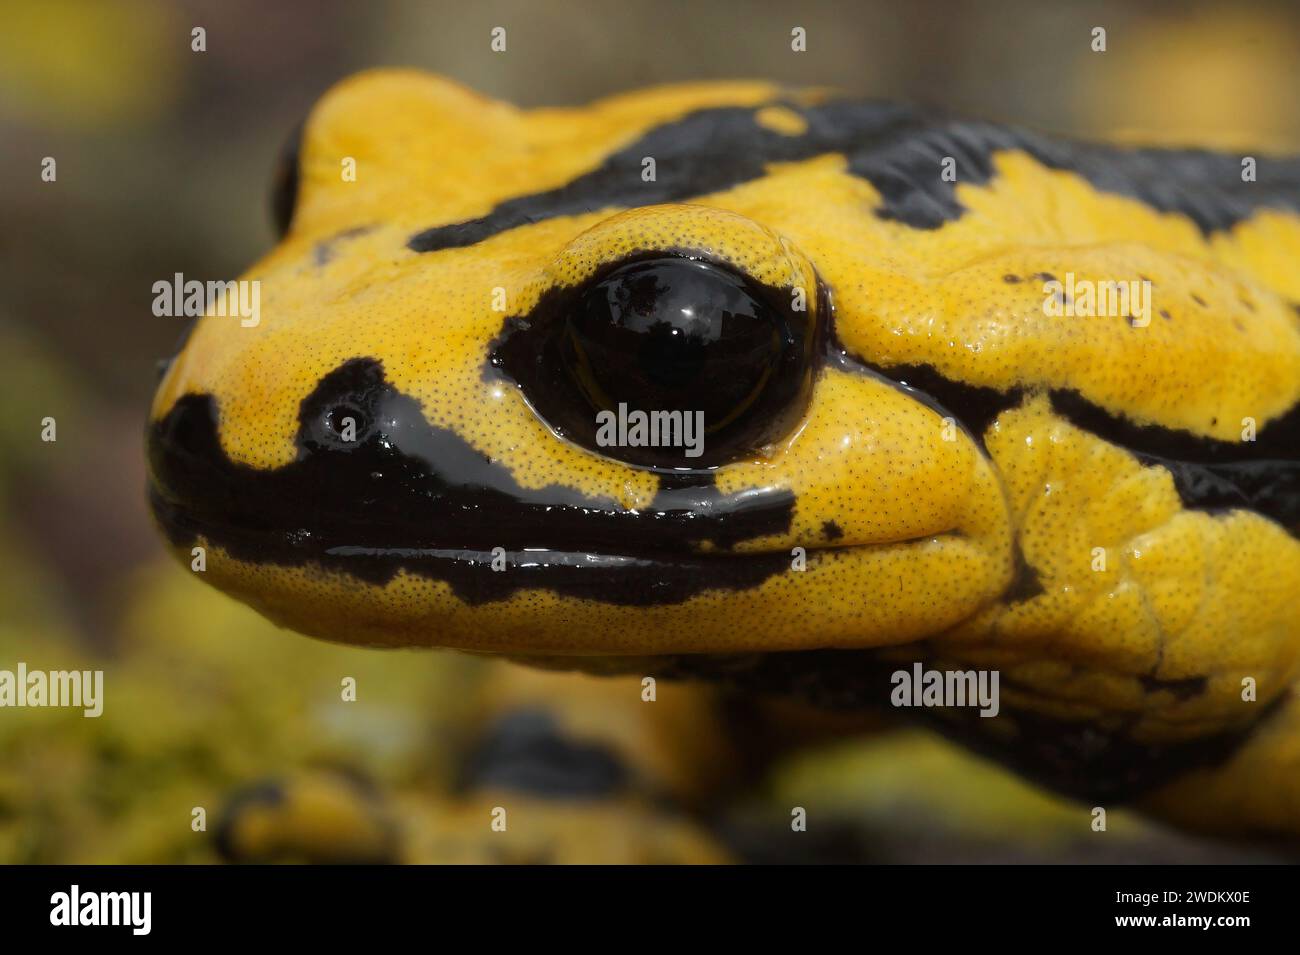 Natural closeup shot of a yellow-colored European Tendi fire salamander, Salamandra salamandra bernardezi on a stone Stock Photo